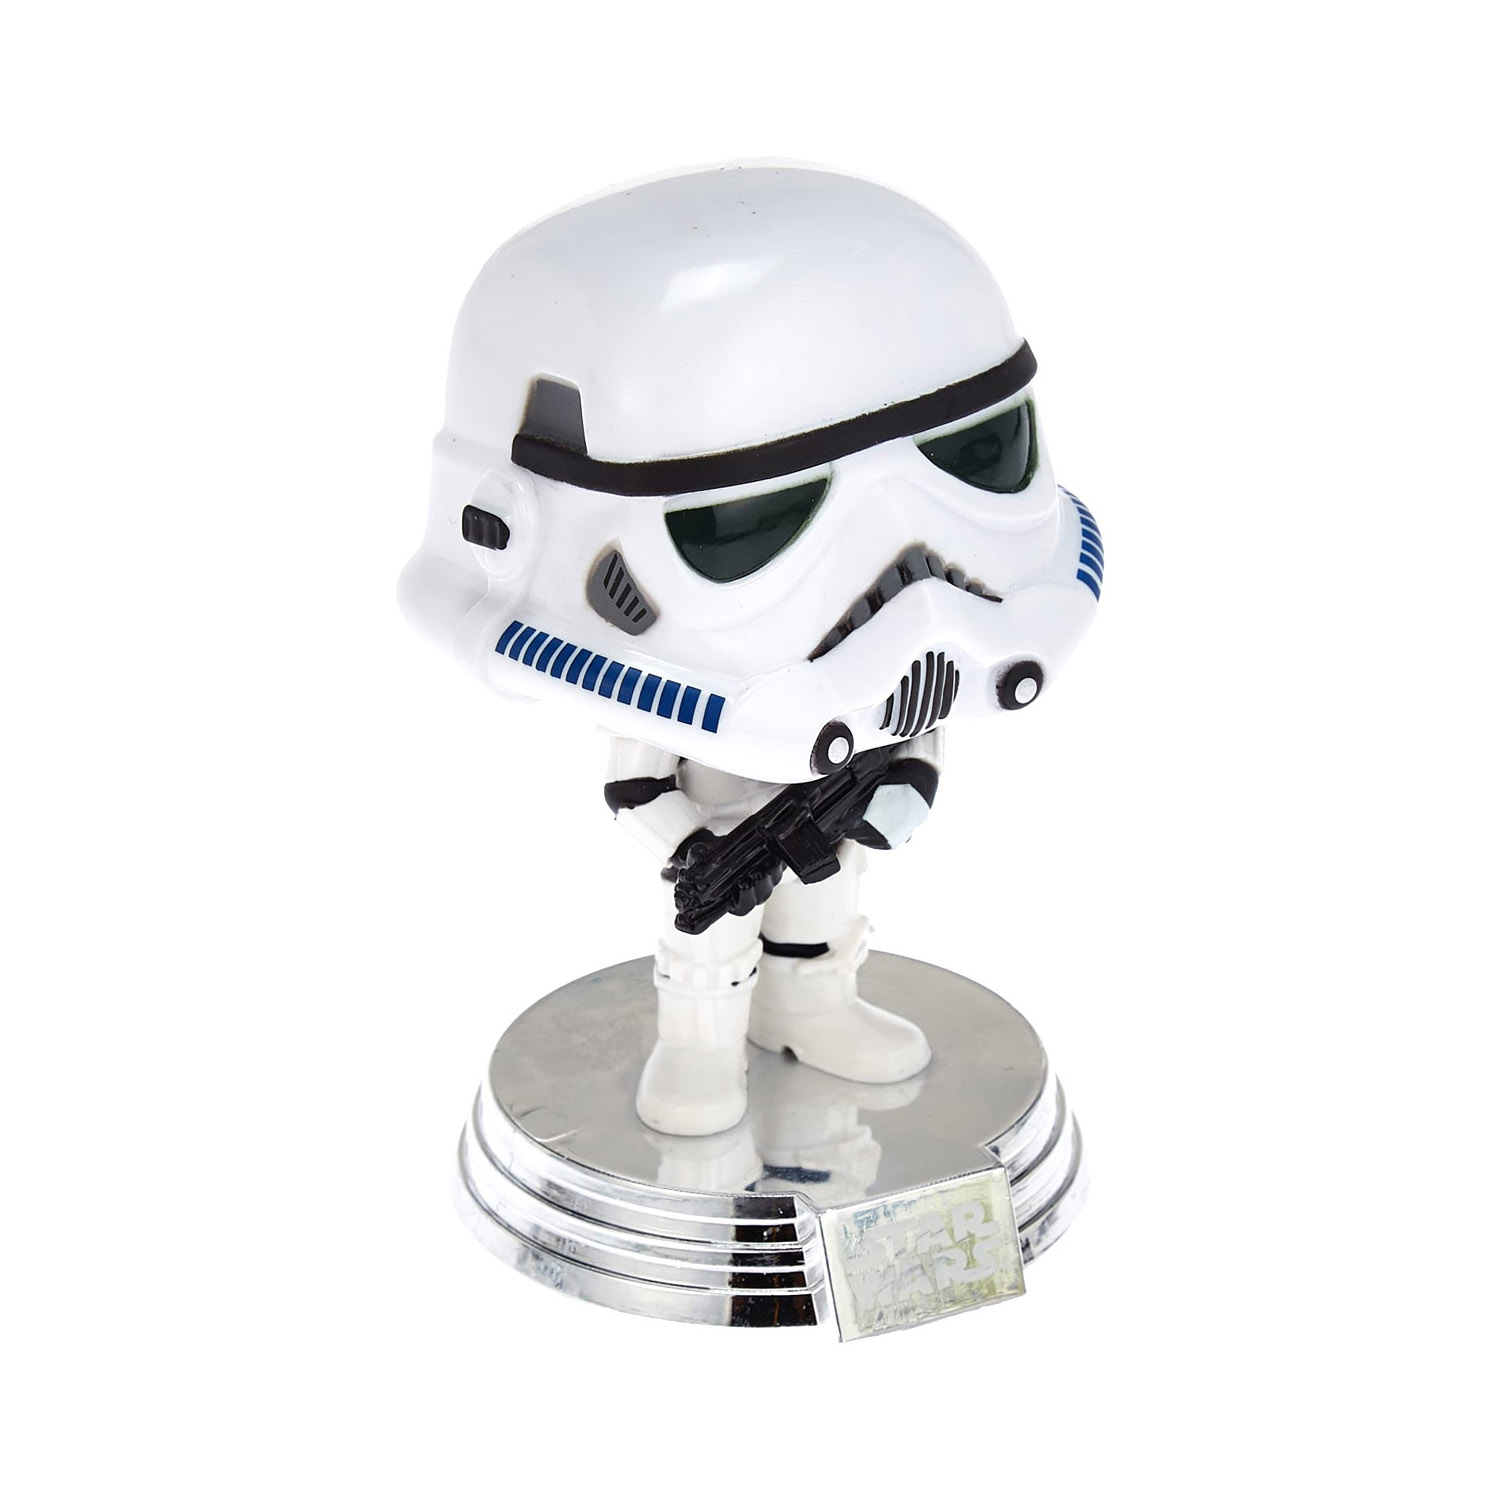 Funko POP! Star Wars Stormtrooper Bobble Head - #510 - Funko, Star Wars